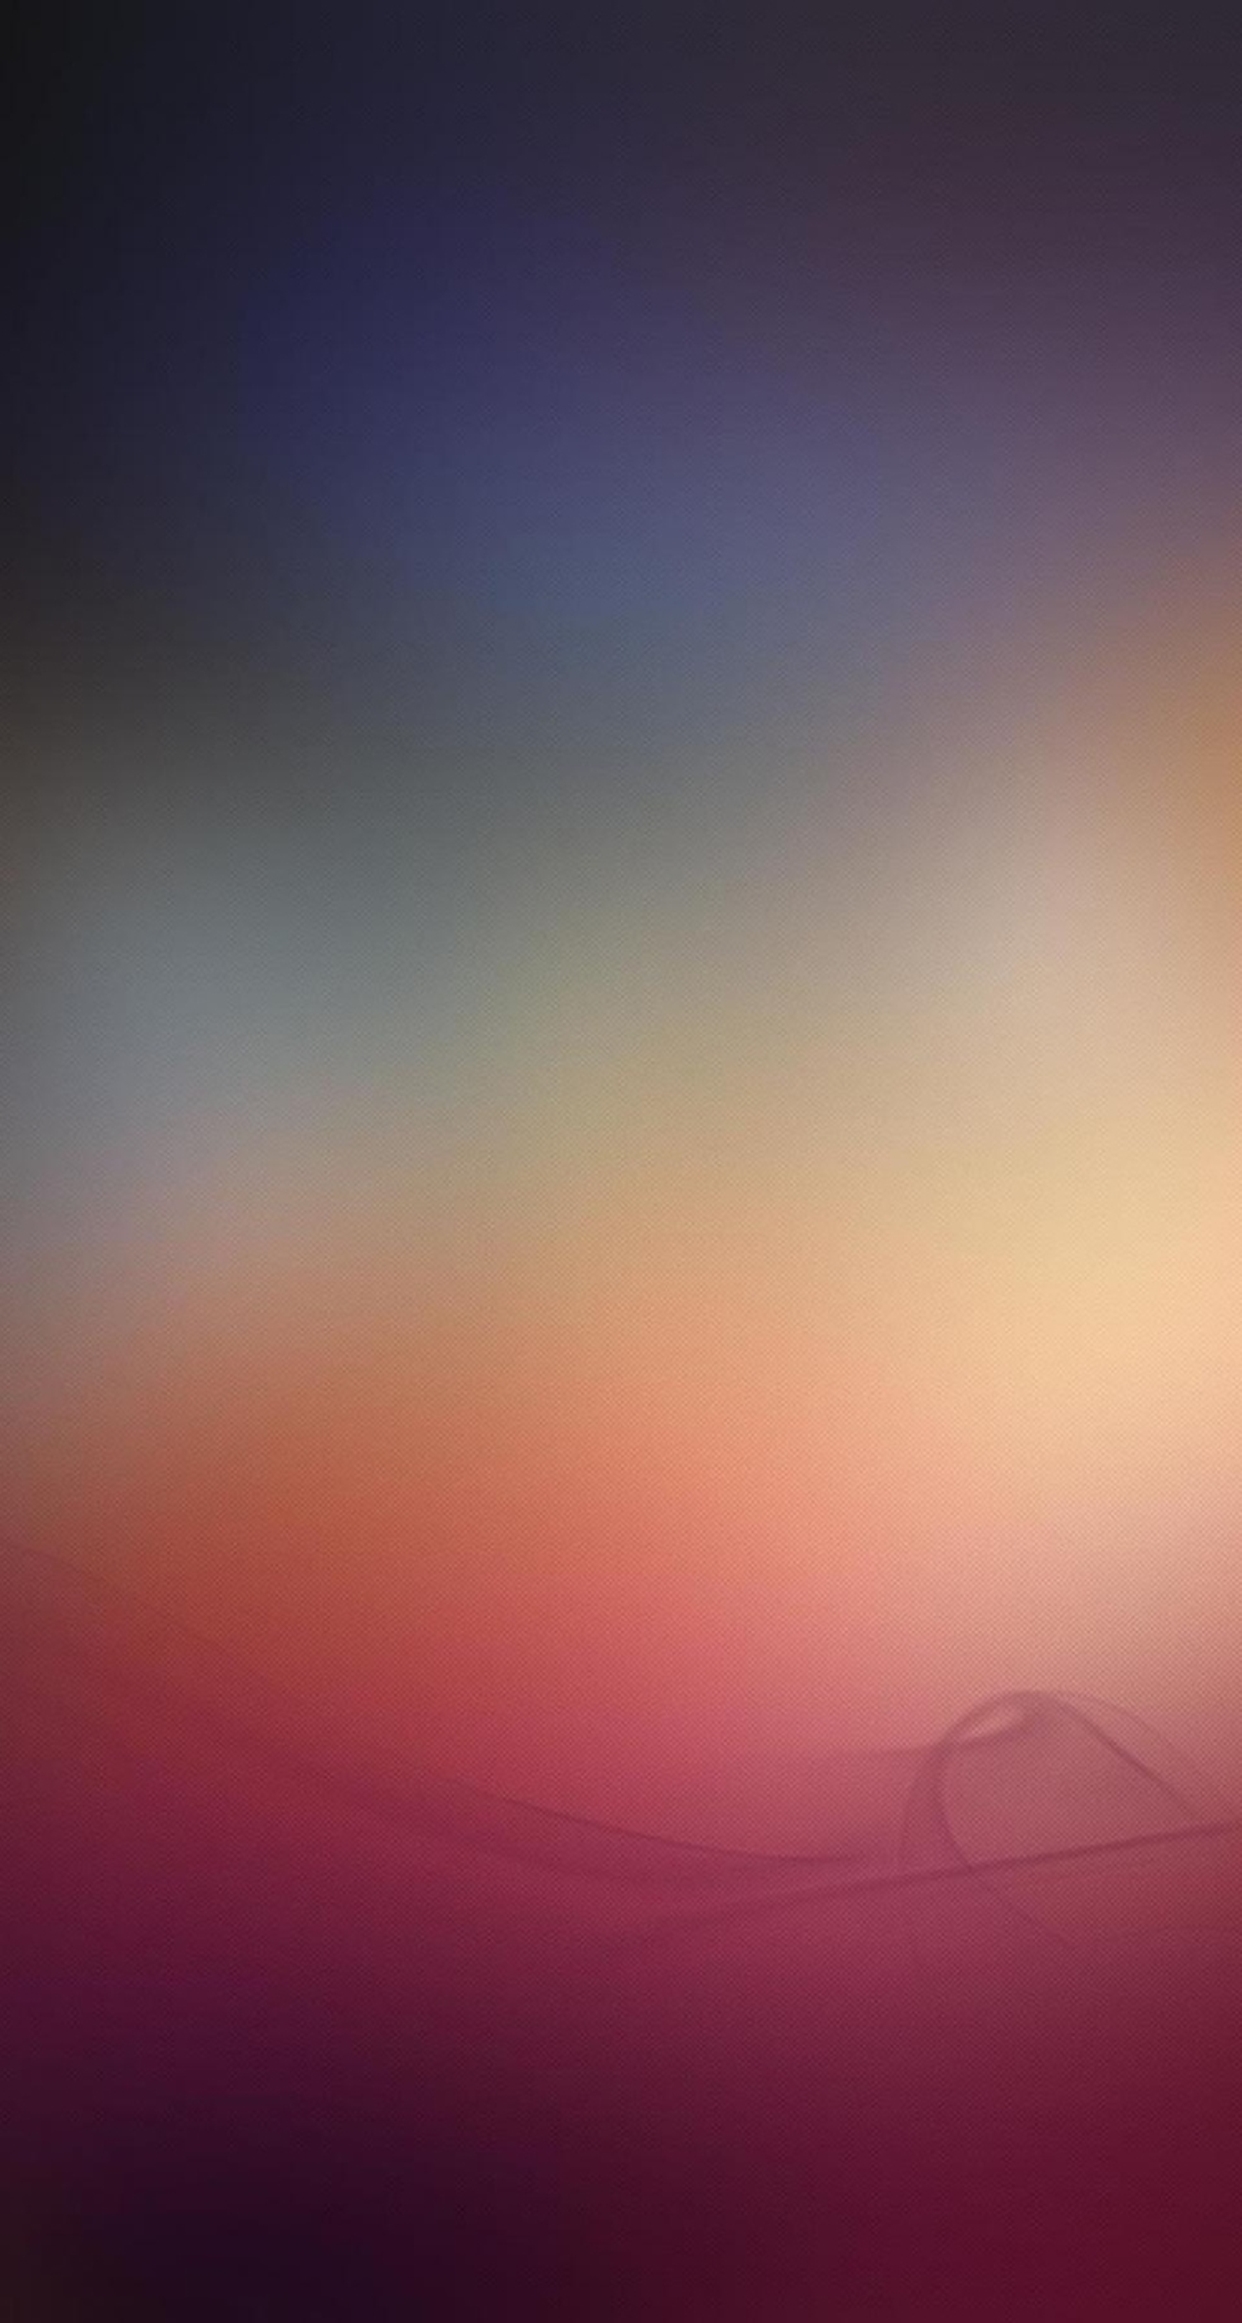 [51+] Abstract iPhone 7 Plus Wallpaper on WallpaperSafari